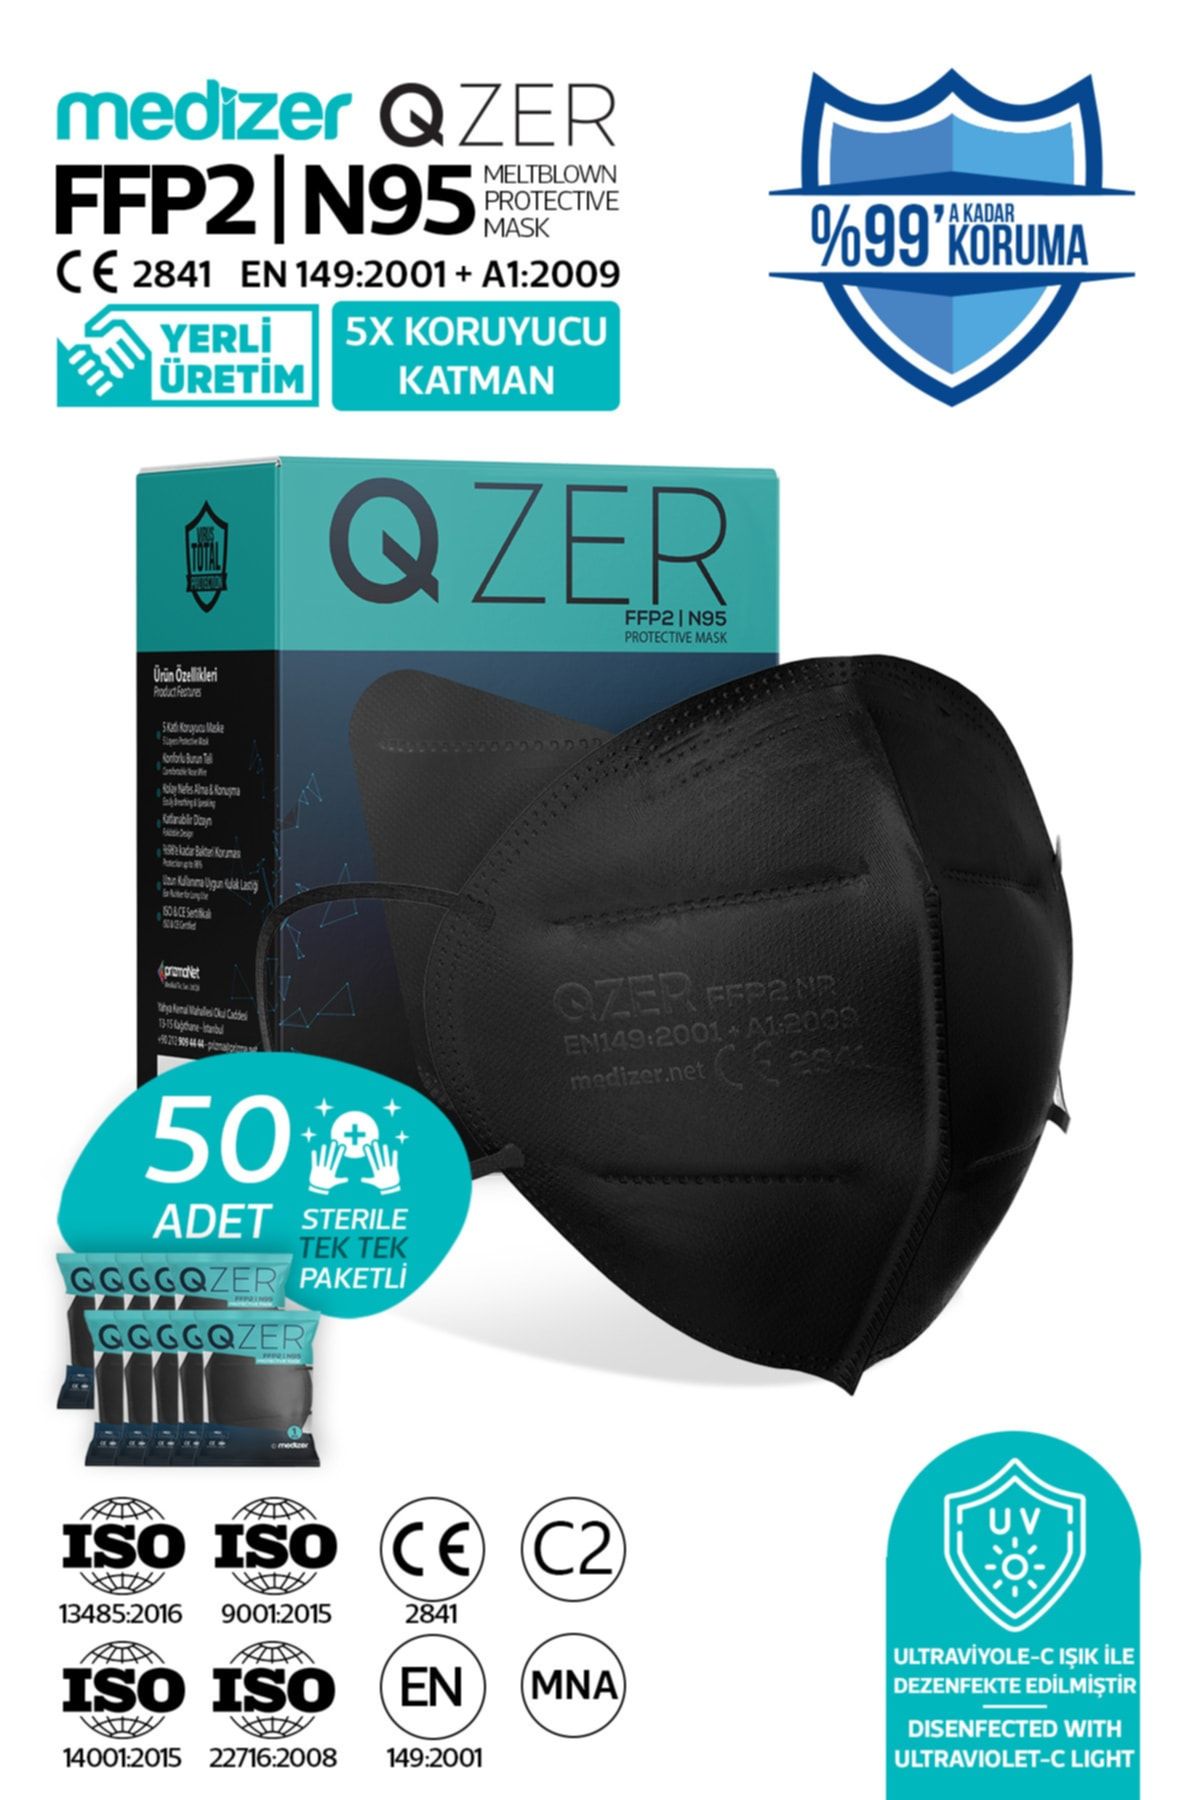 Medizer Qzer 50 Adet Siyah Renk 5 Katmanlı N95 Maske